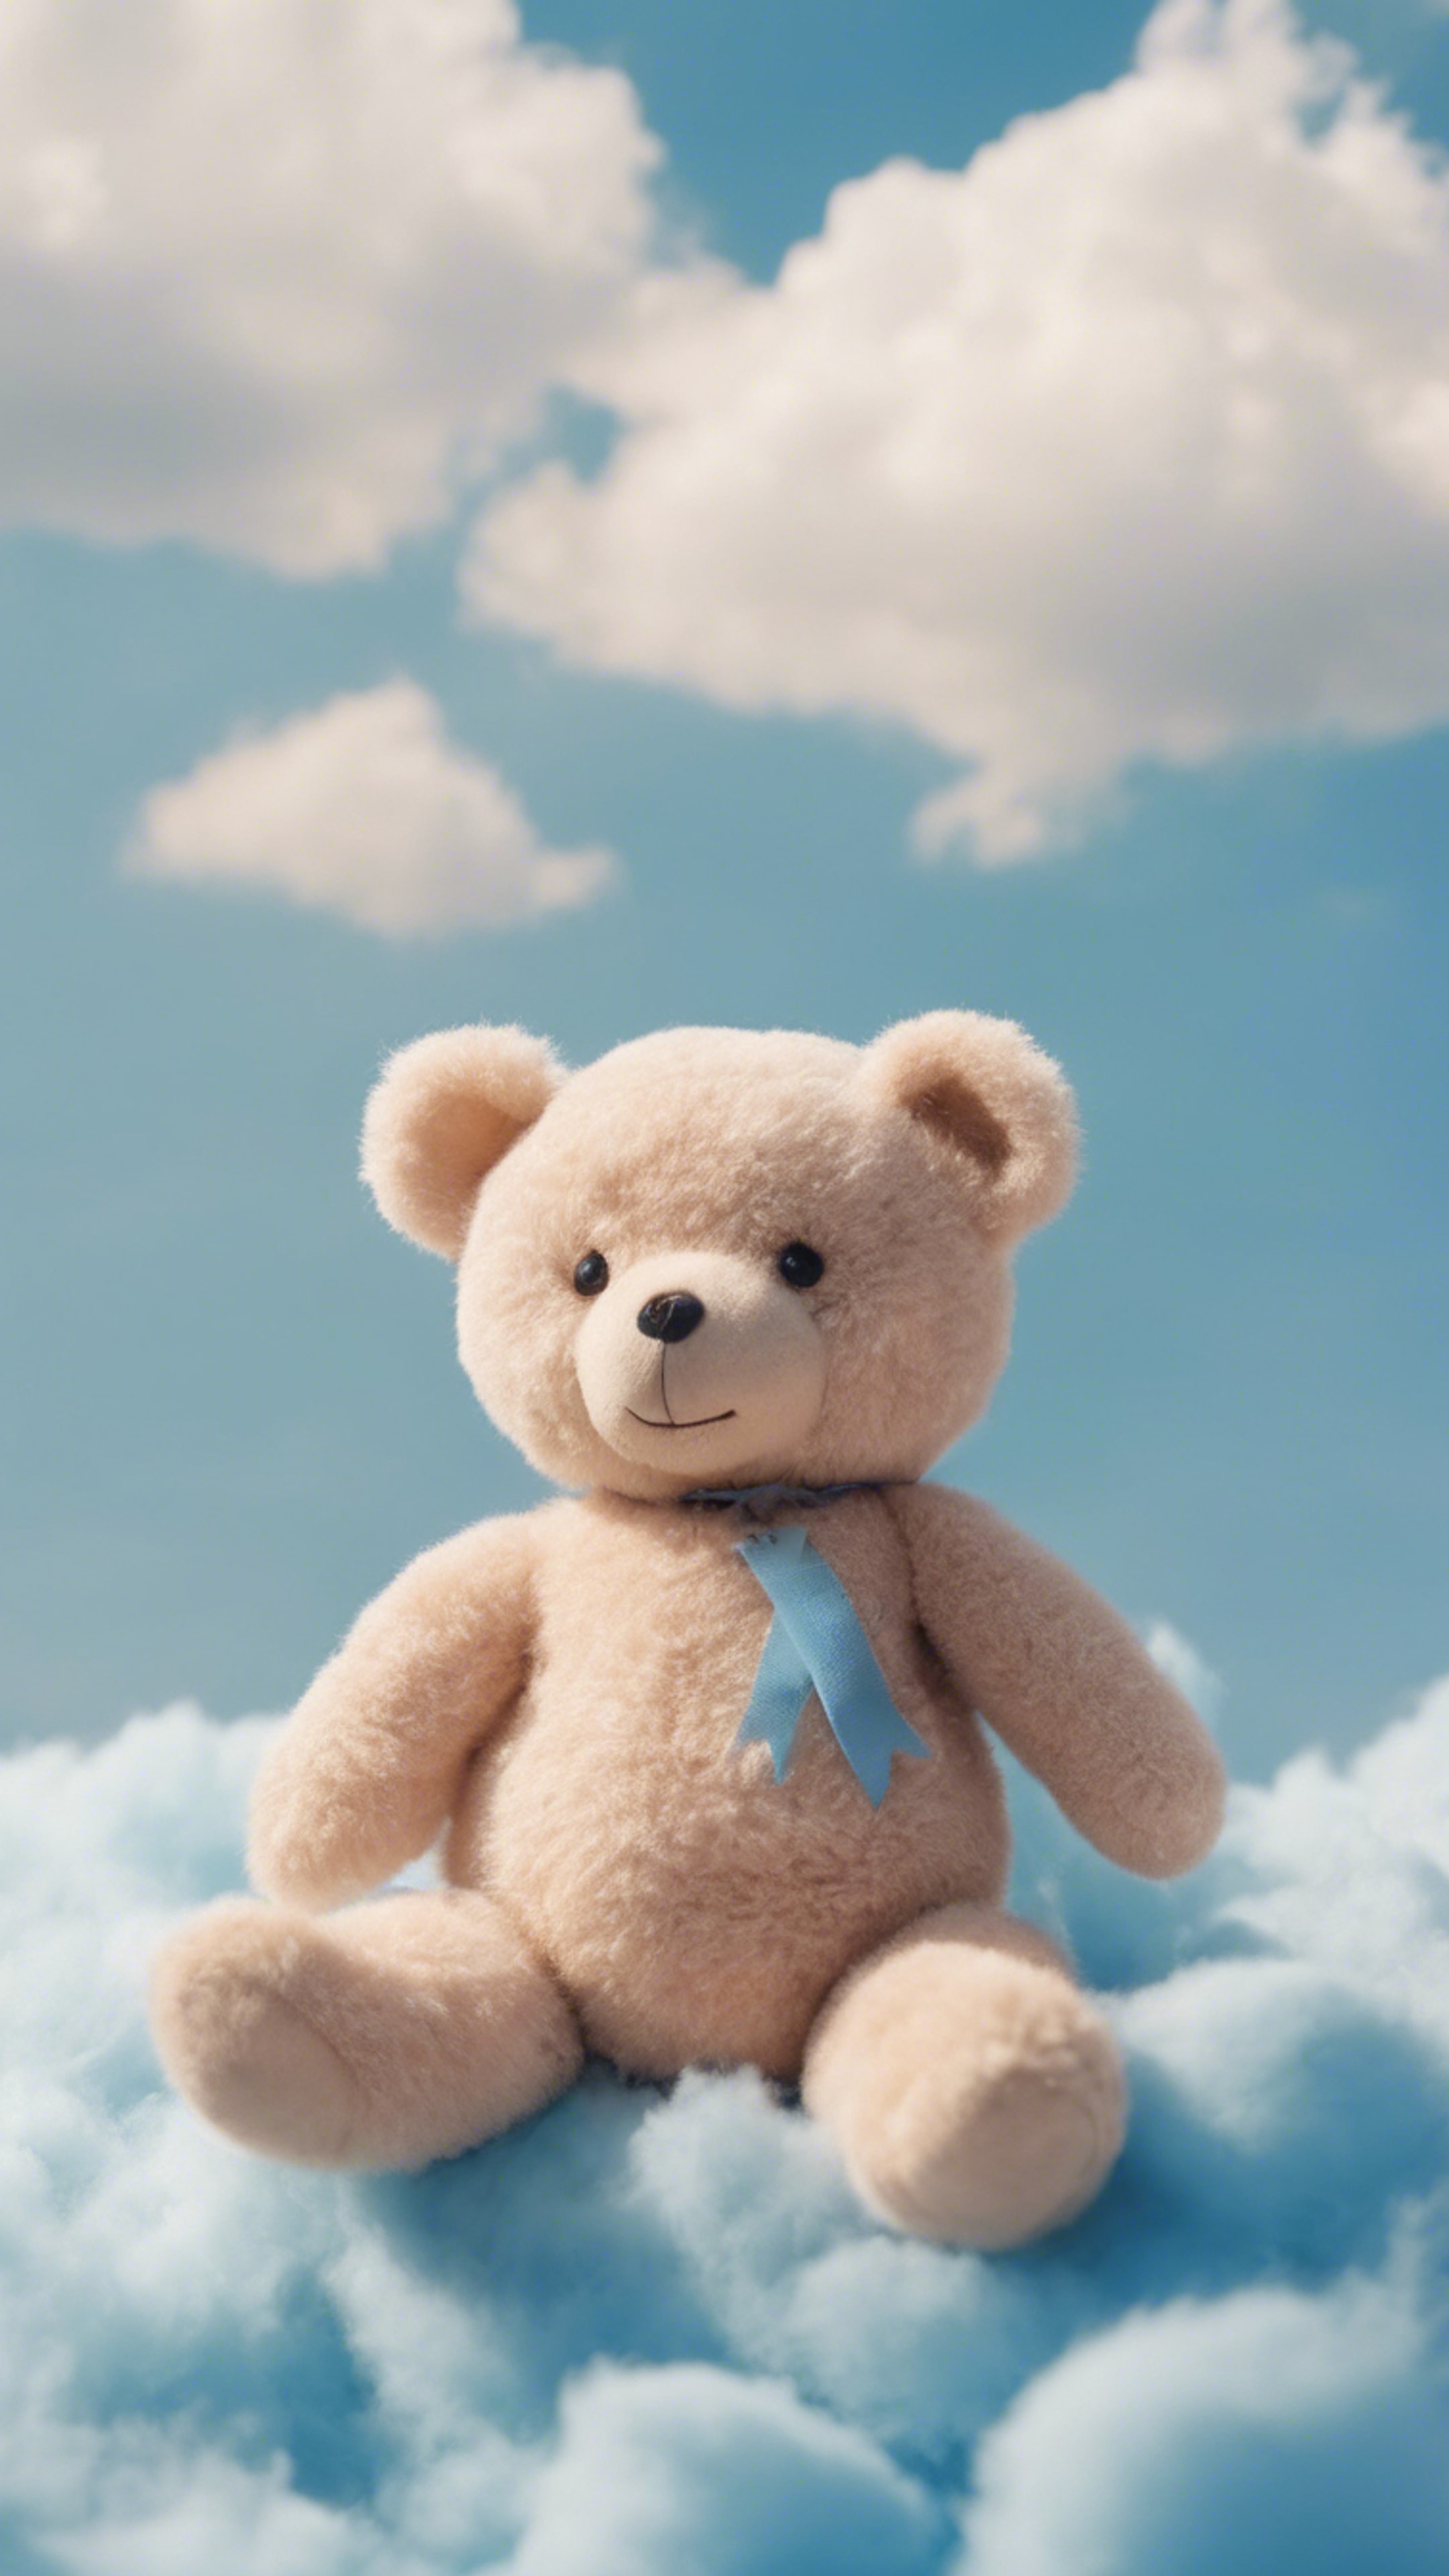 A kawaii beige teddy bear sitting on a soft fluffy cloud in a blue sky. Ფონი[56112c47d15a43519872]